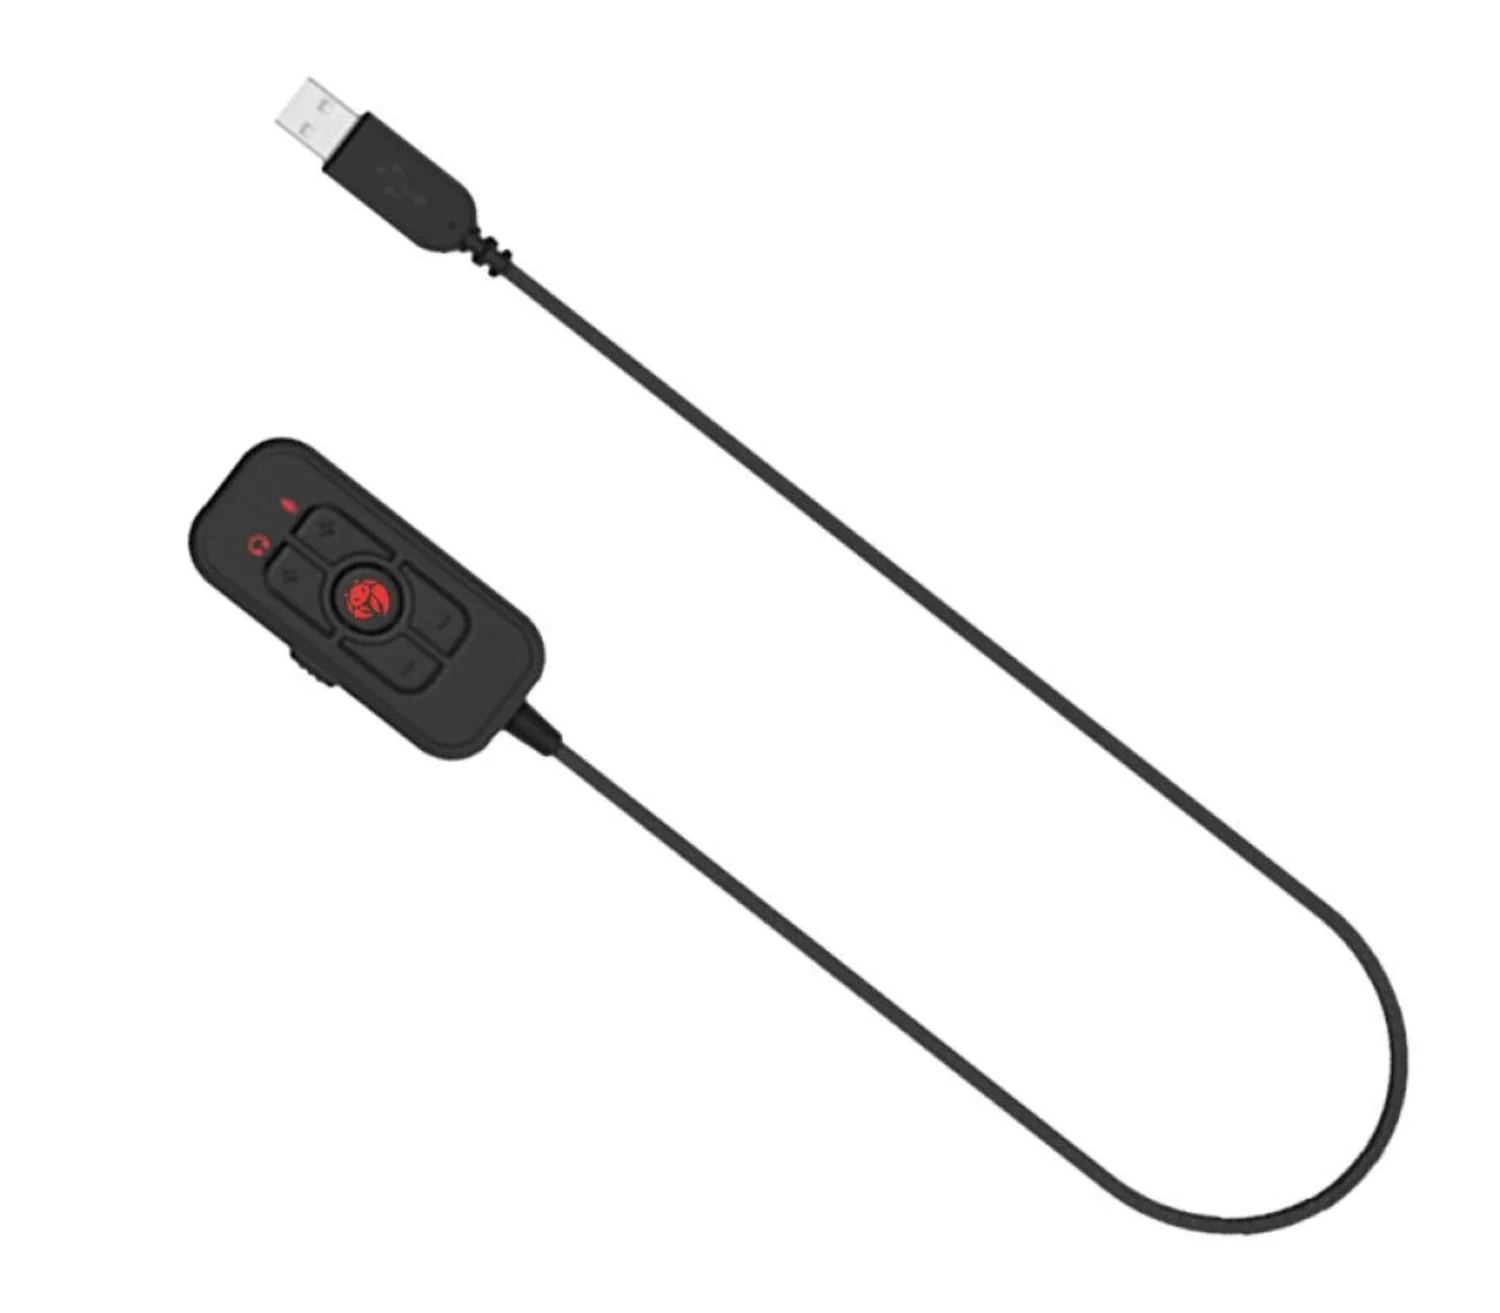 Headset Gamer Quanta Krab Bloodstone KBGH50 7.1 Virtual / Driver 53mm / Microfone Removível - Preto e Vermelho